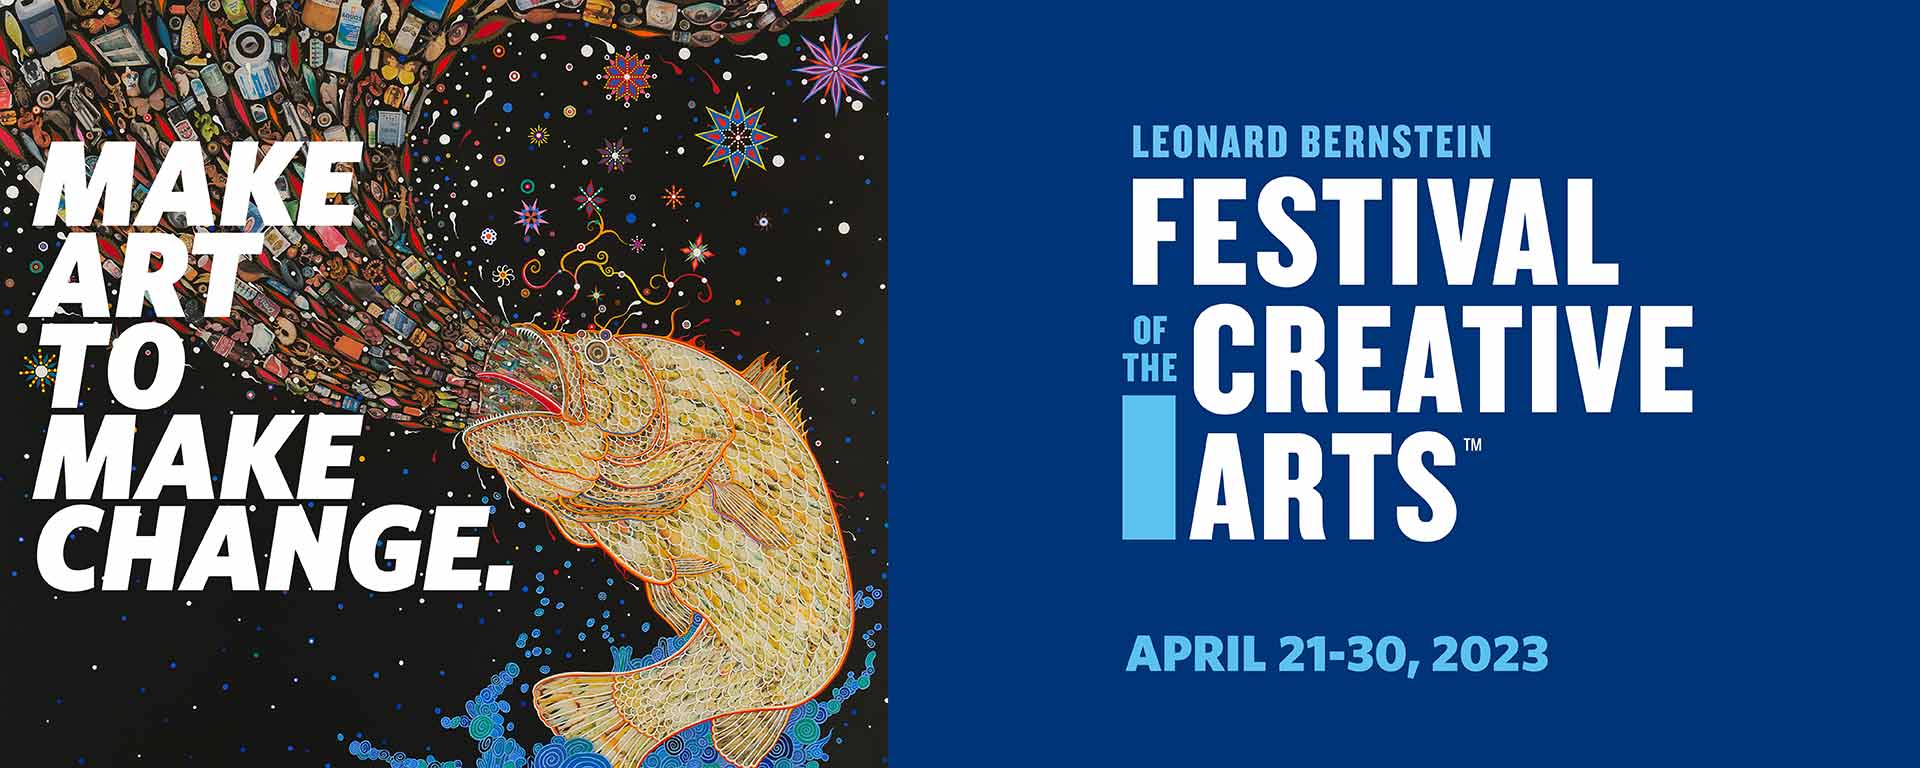 Leonard Bernstein Festival of the Creative Arts | Make Art to Make Change | April 21-30, 2023